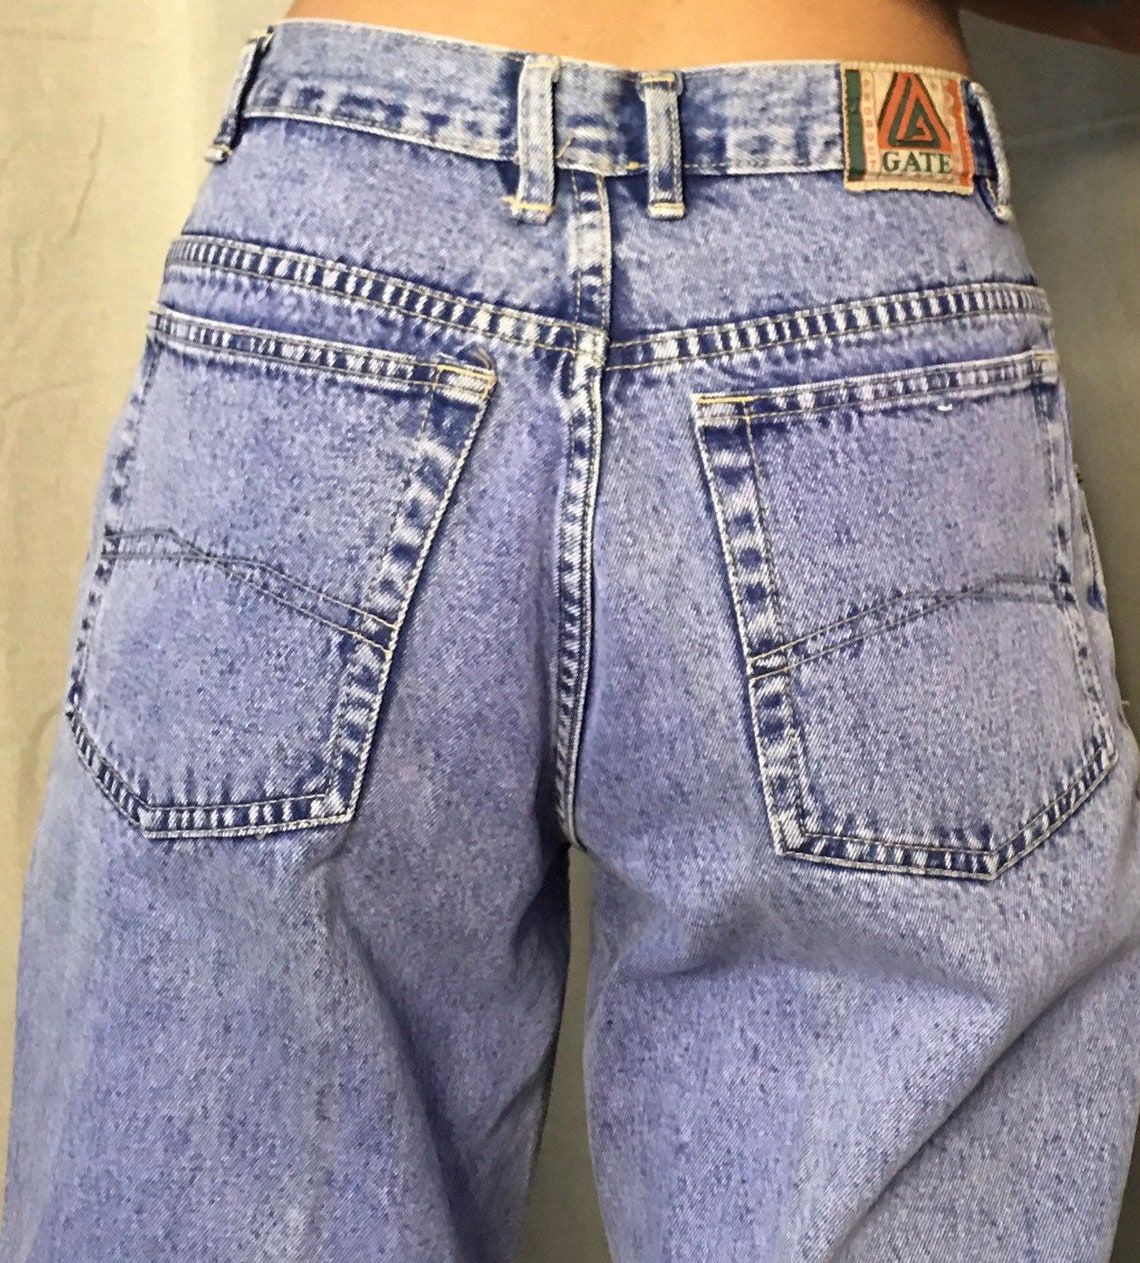 Vintage LA Gate brand nineties faded wash baggy blue jeans | Etsy